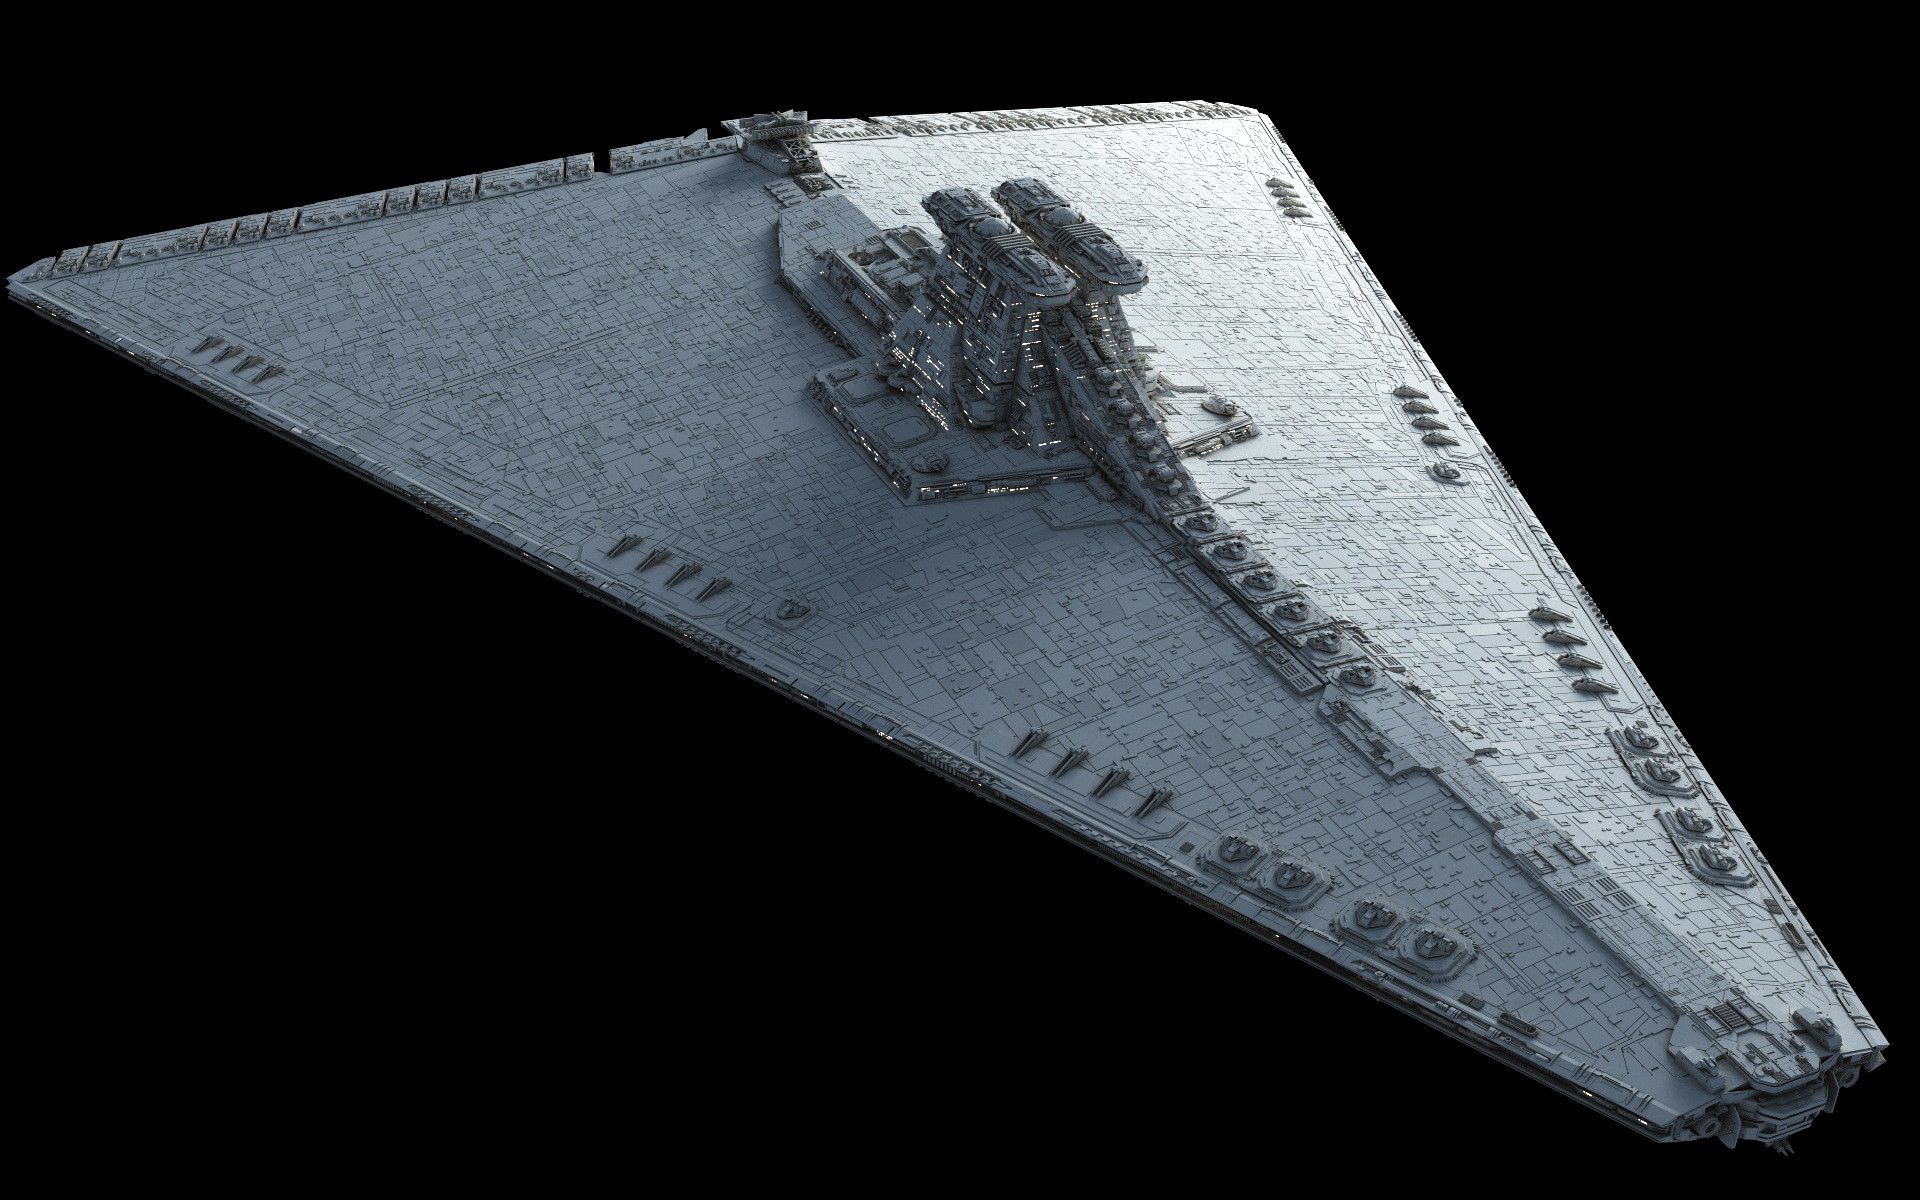 Fine Art: The Big, Beautiful Ships Of Star Wars